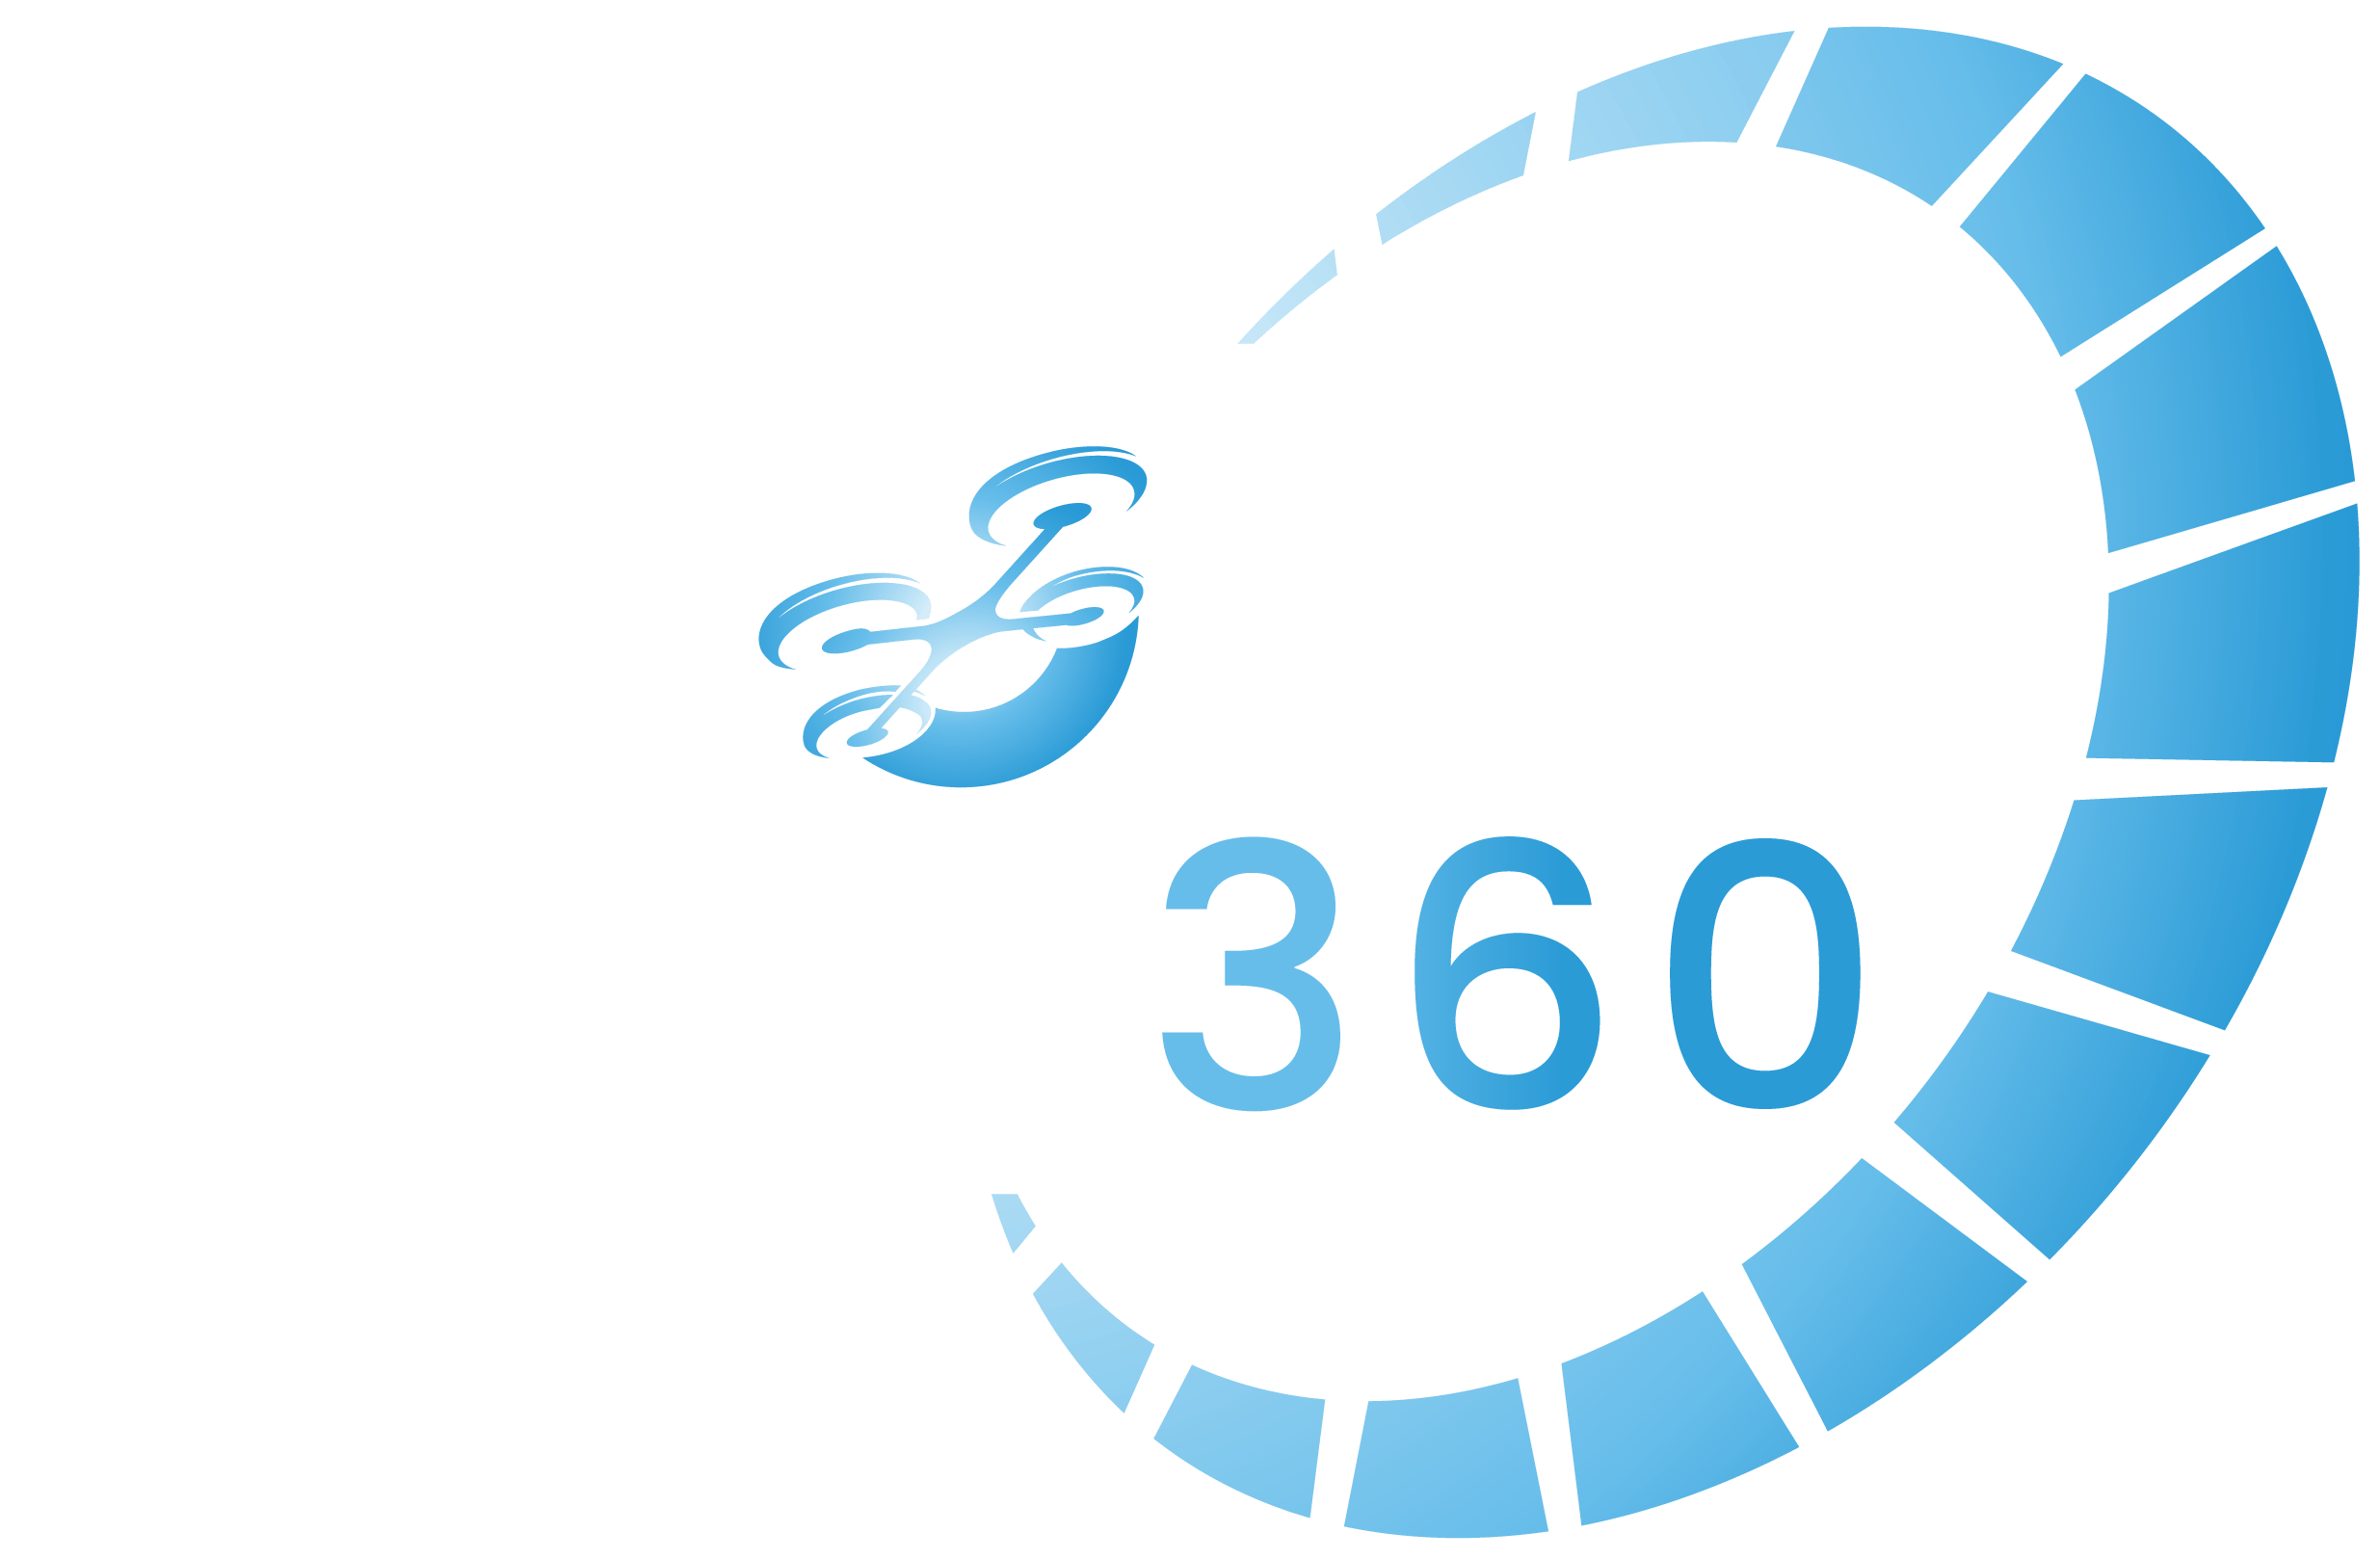 DroneSuite360